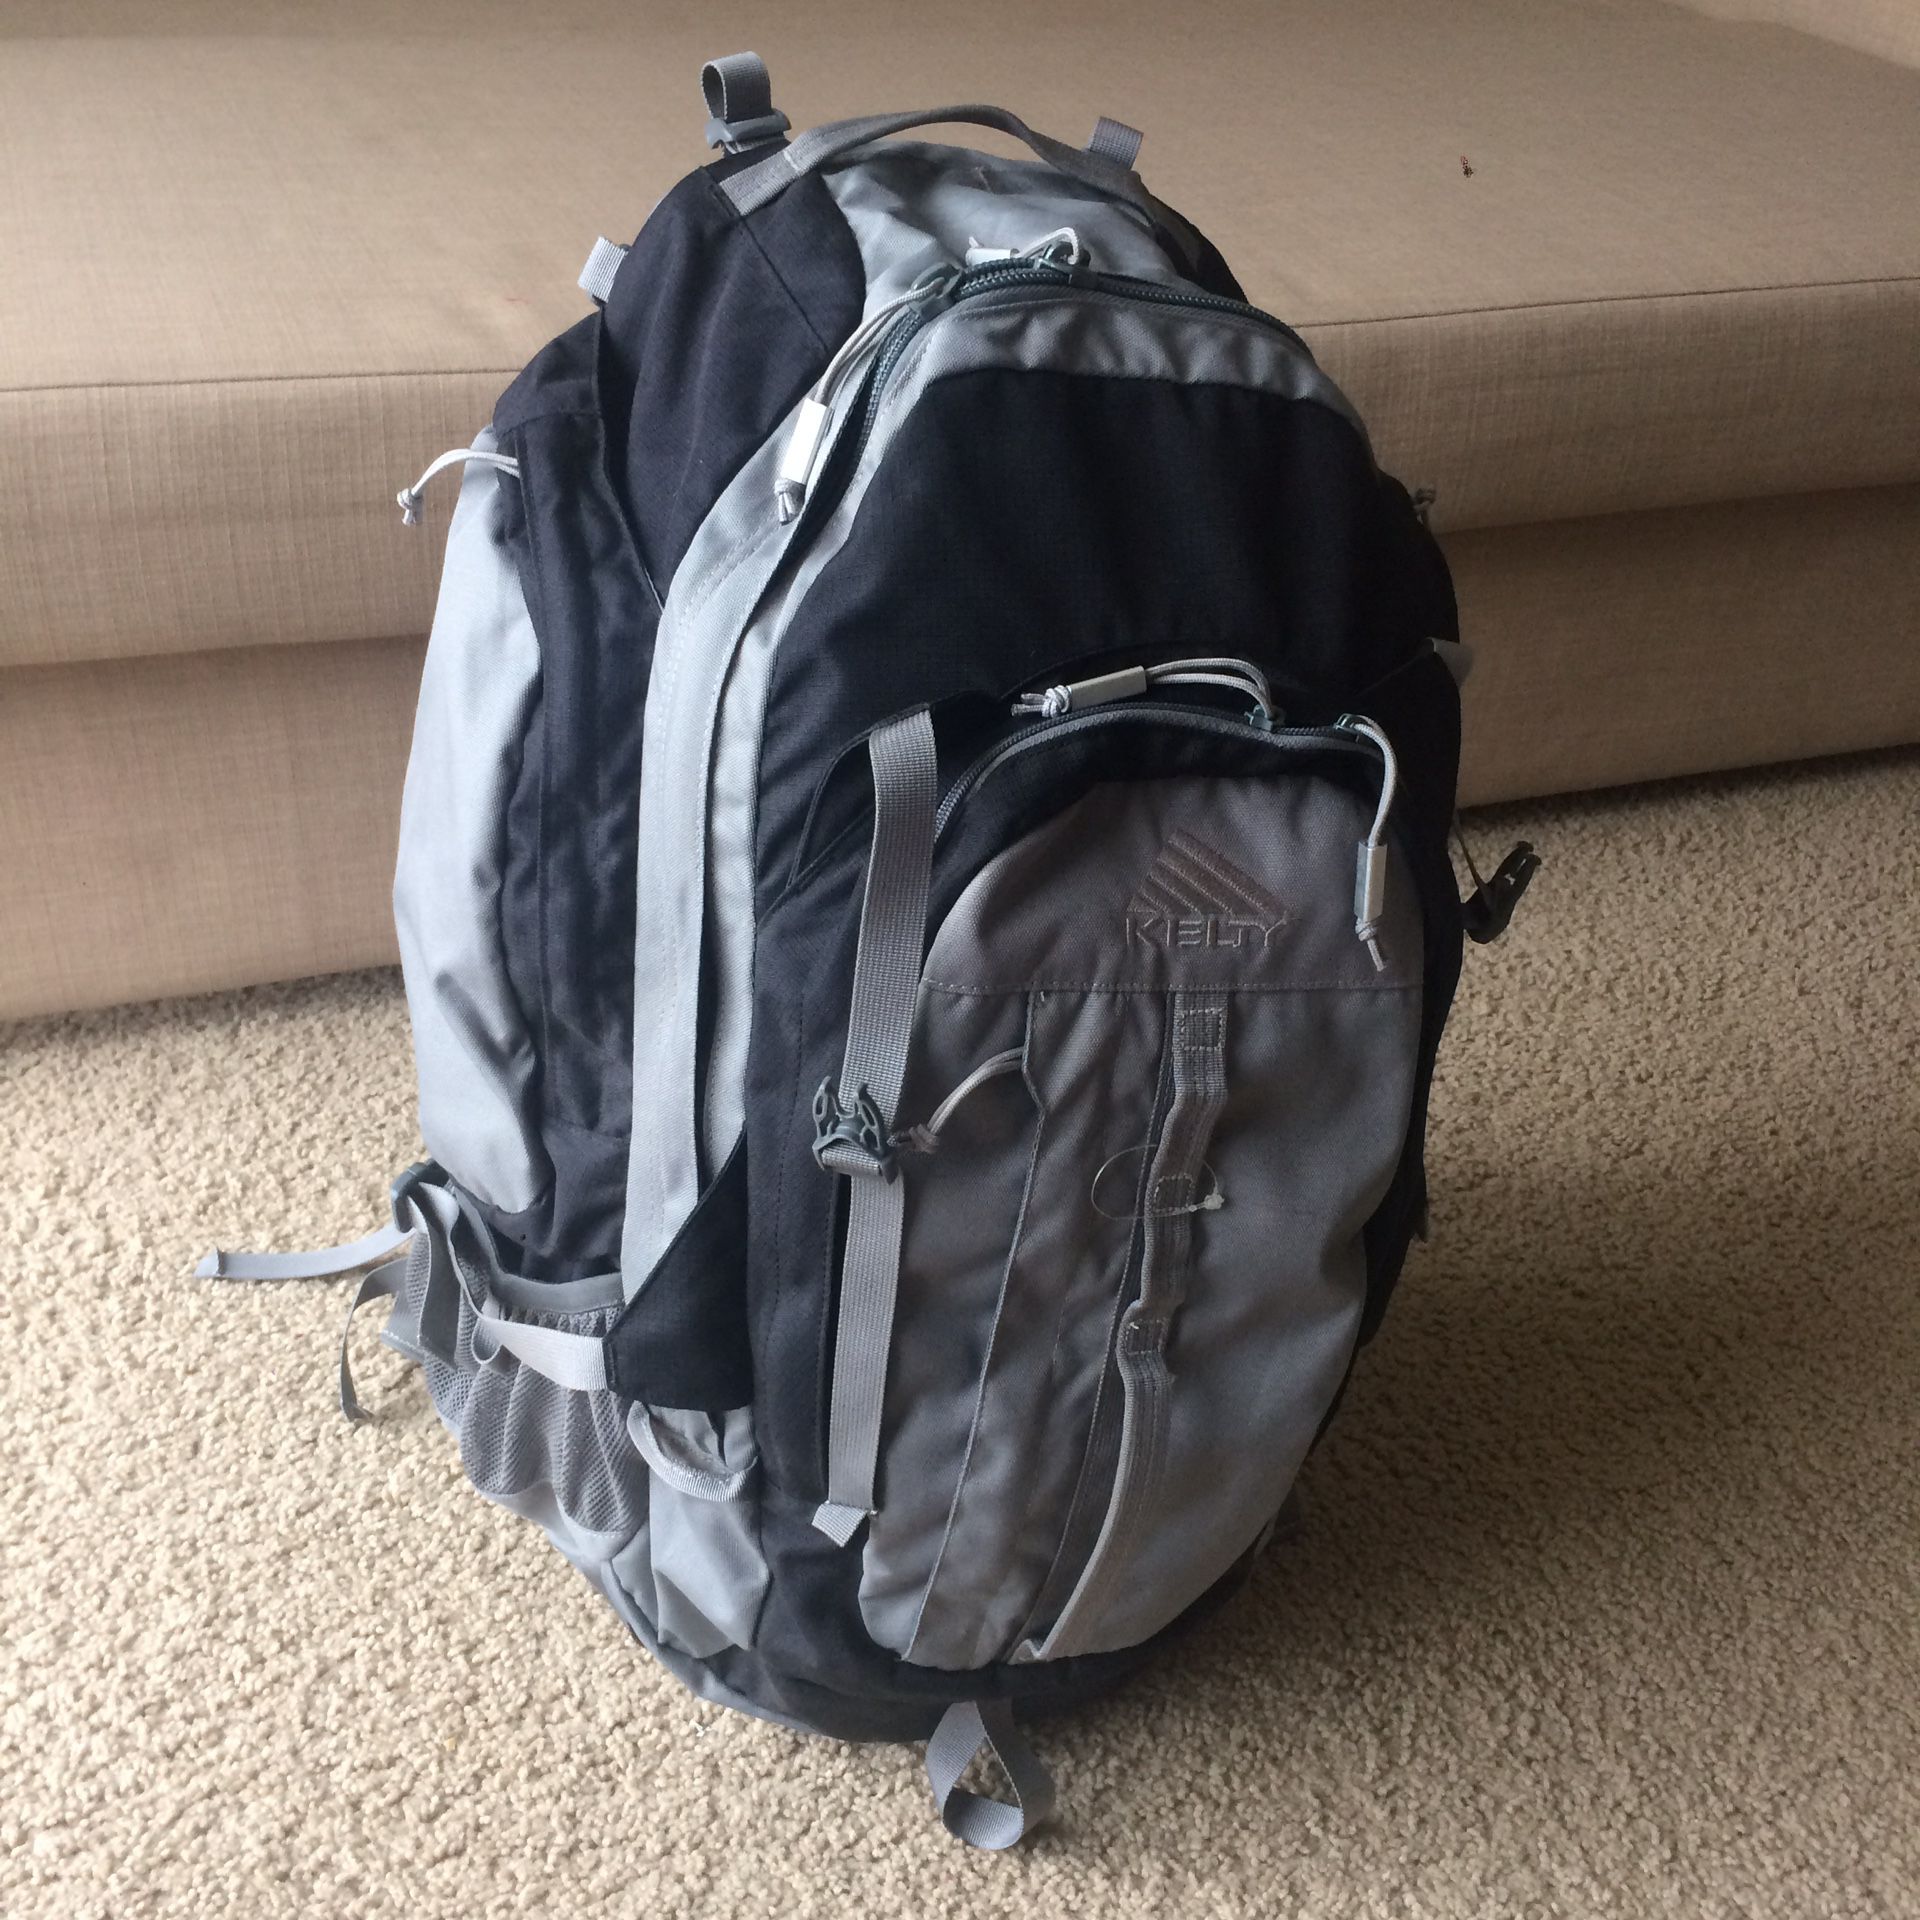 Kelty Redwing 3100 backpack . Black & Grey